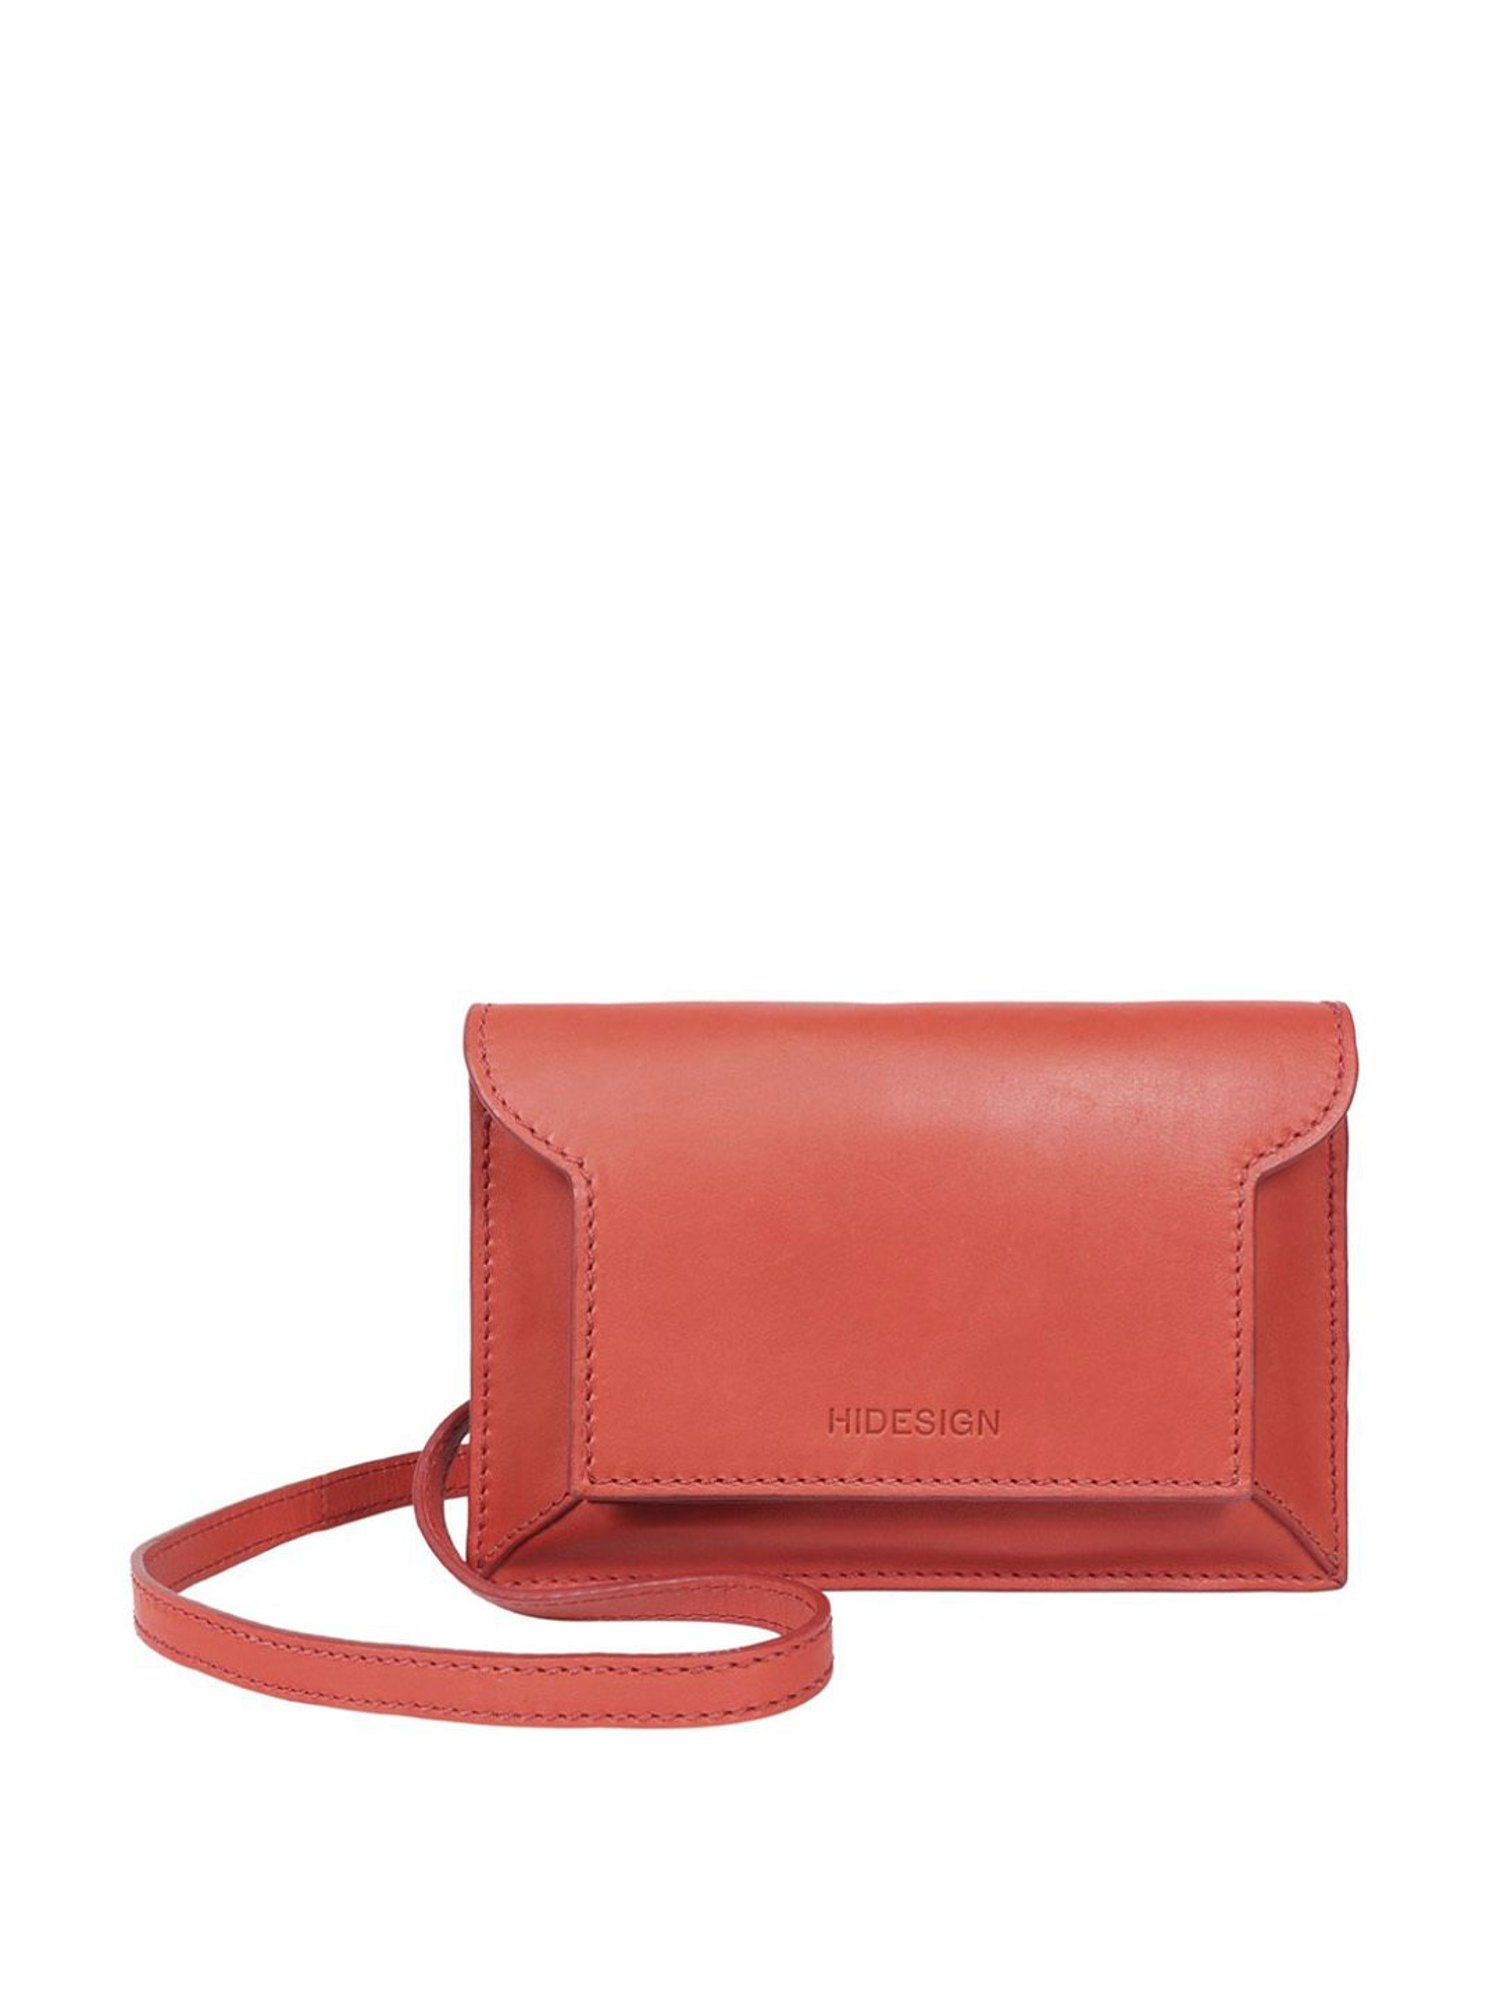 Hidesign Women's Clutch (Red Brown) : Amazon.in: Shoes & Handbags